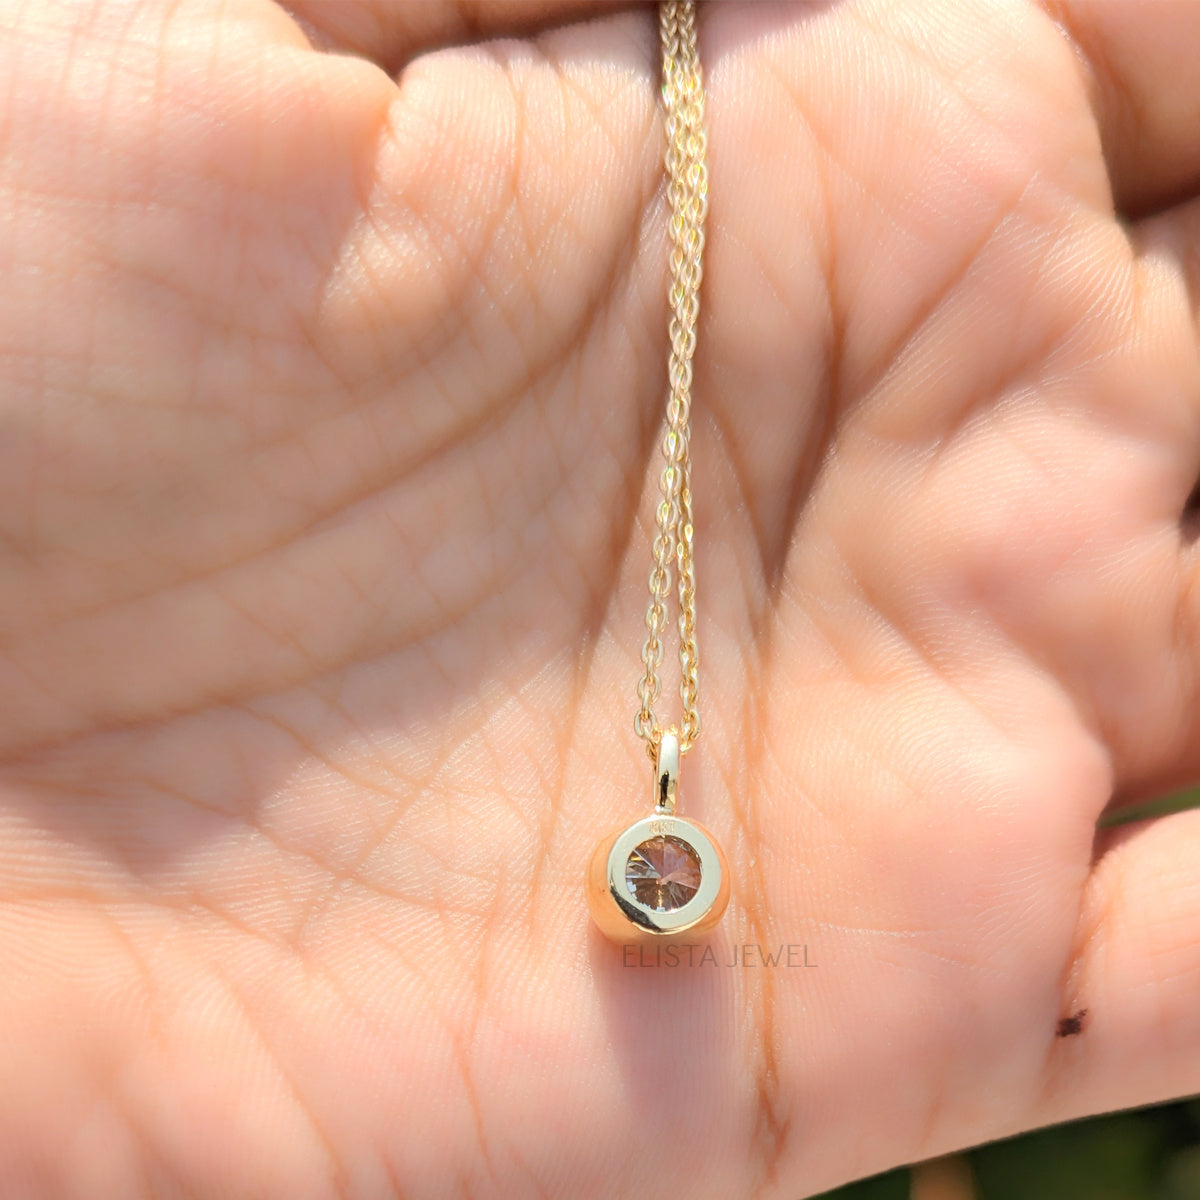 Minimalist Dainty Round Diamond Solitaire Bezel Gold Pendant & 18 inch Chain Set